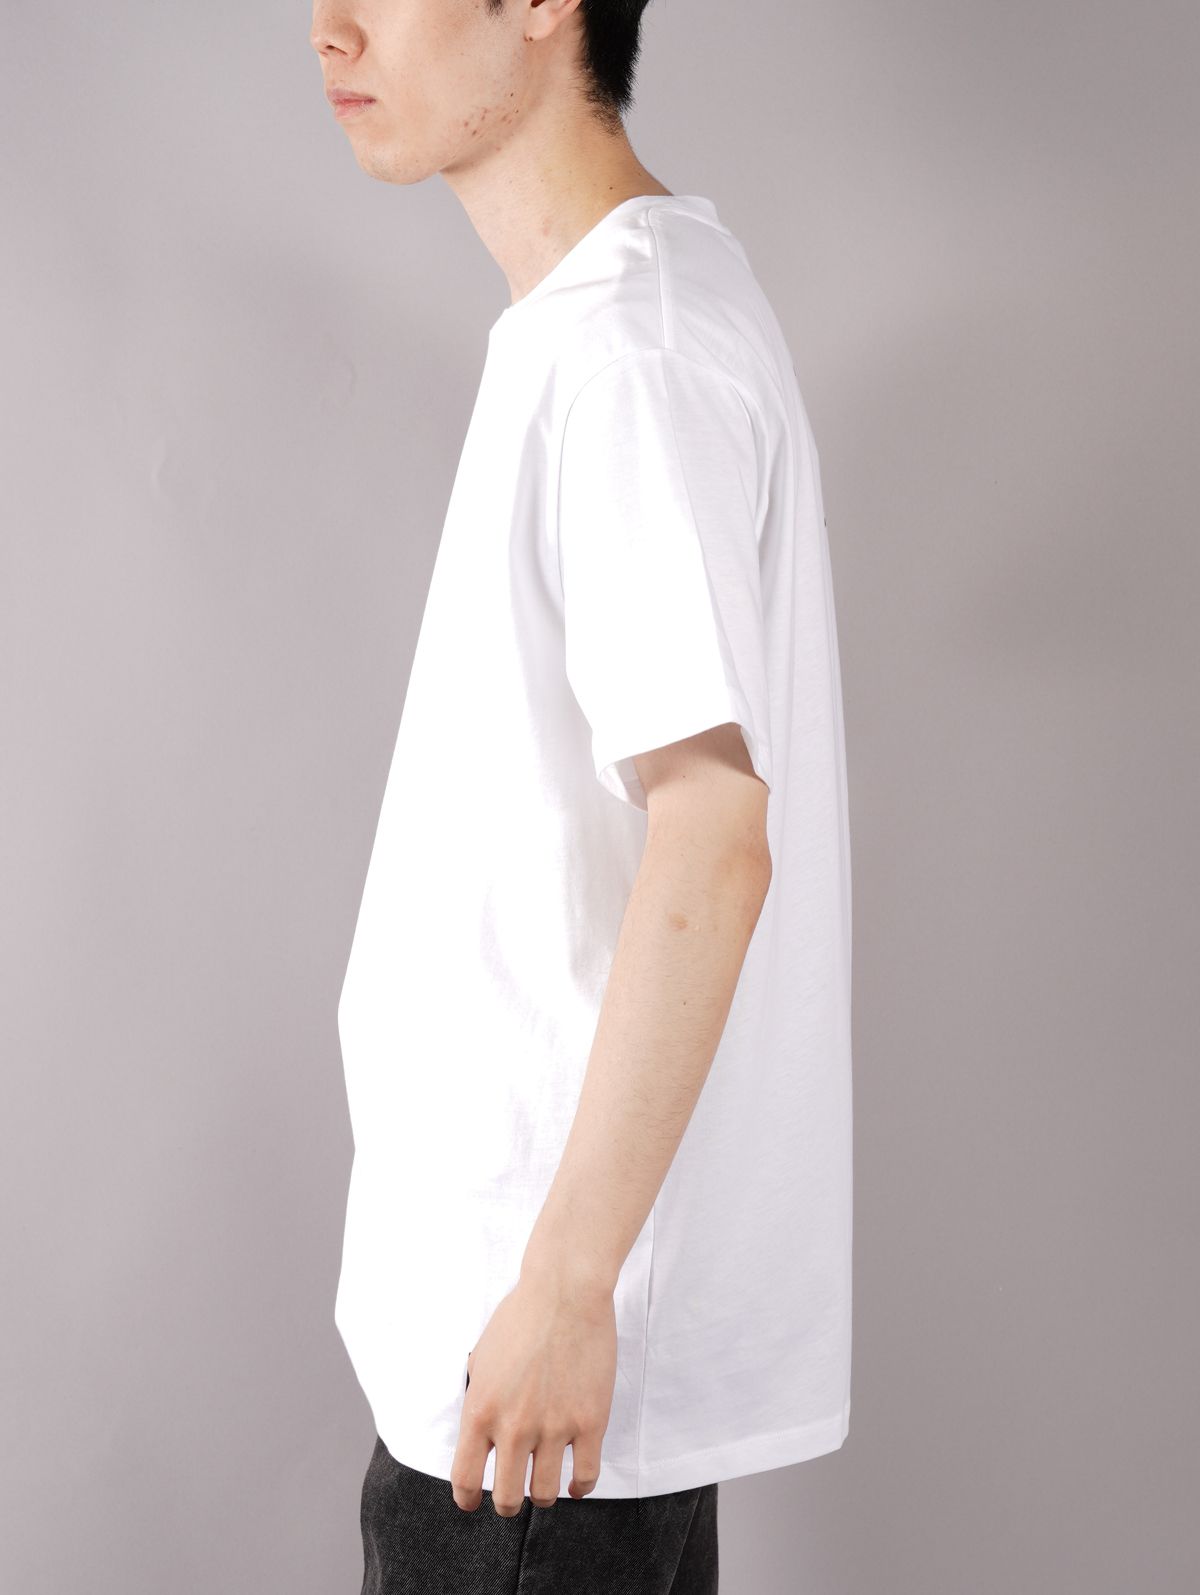 BALMAIN - 【ラスト1点】BALMAIN BUCK T-SHIRT / バックロゴ Tシャツ ...